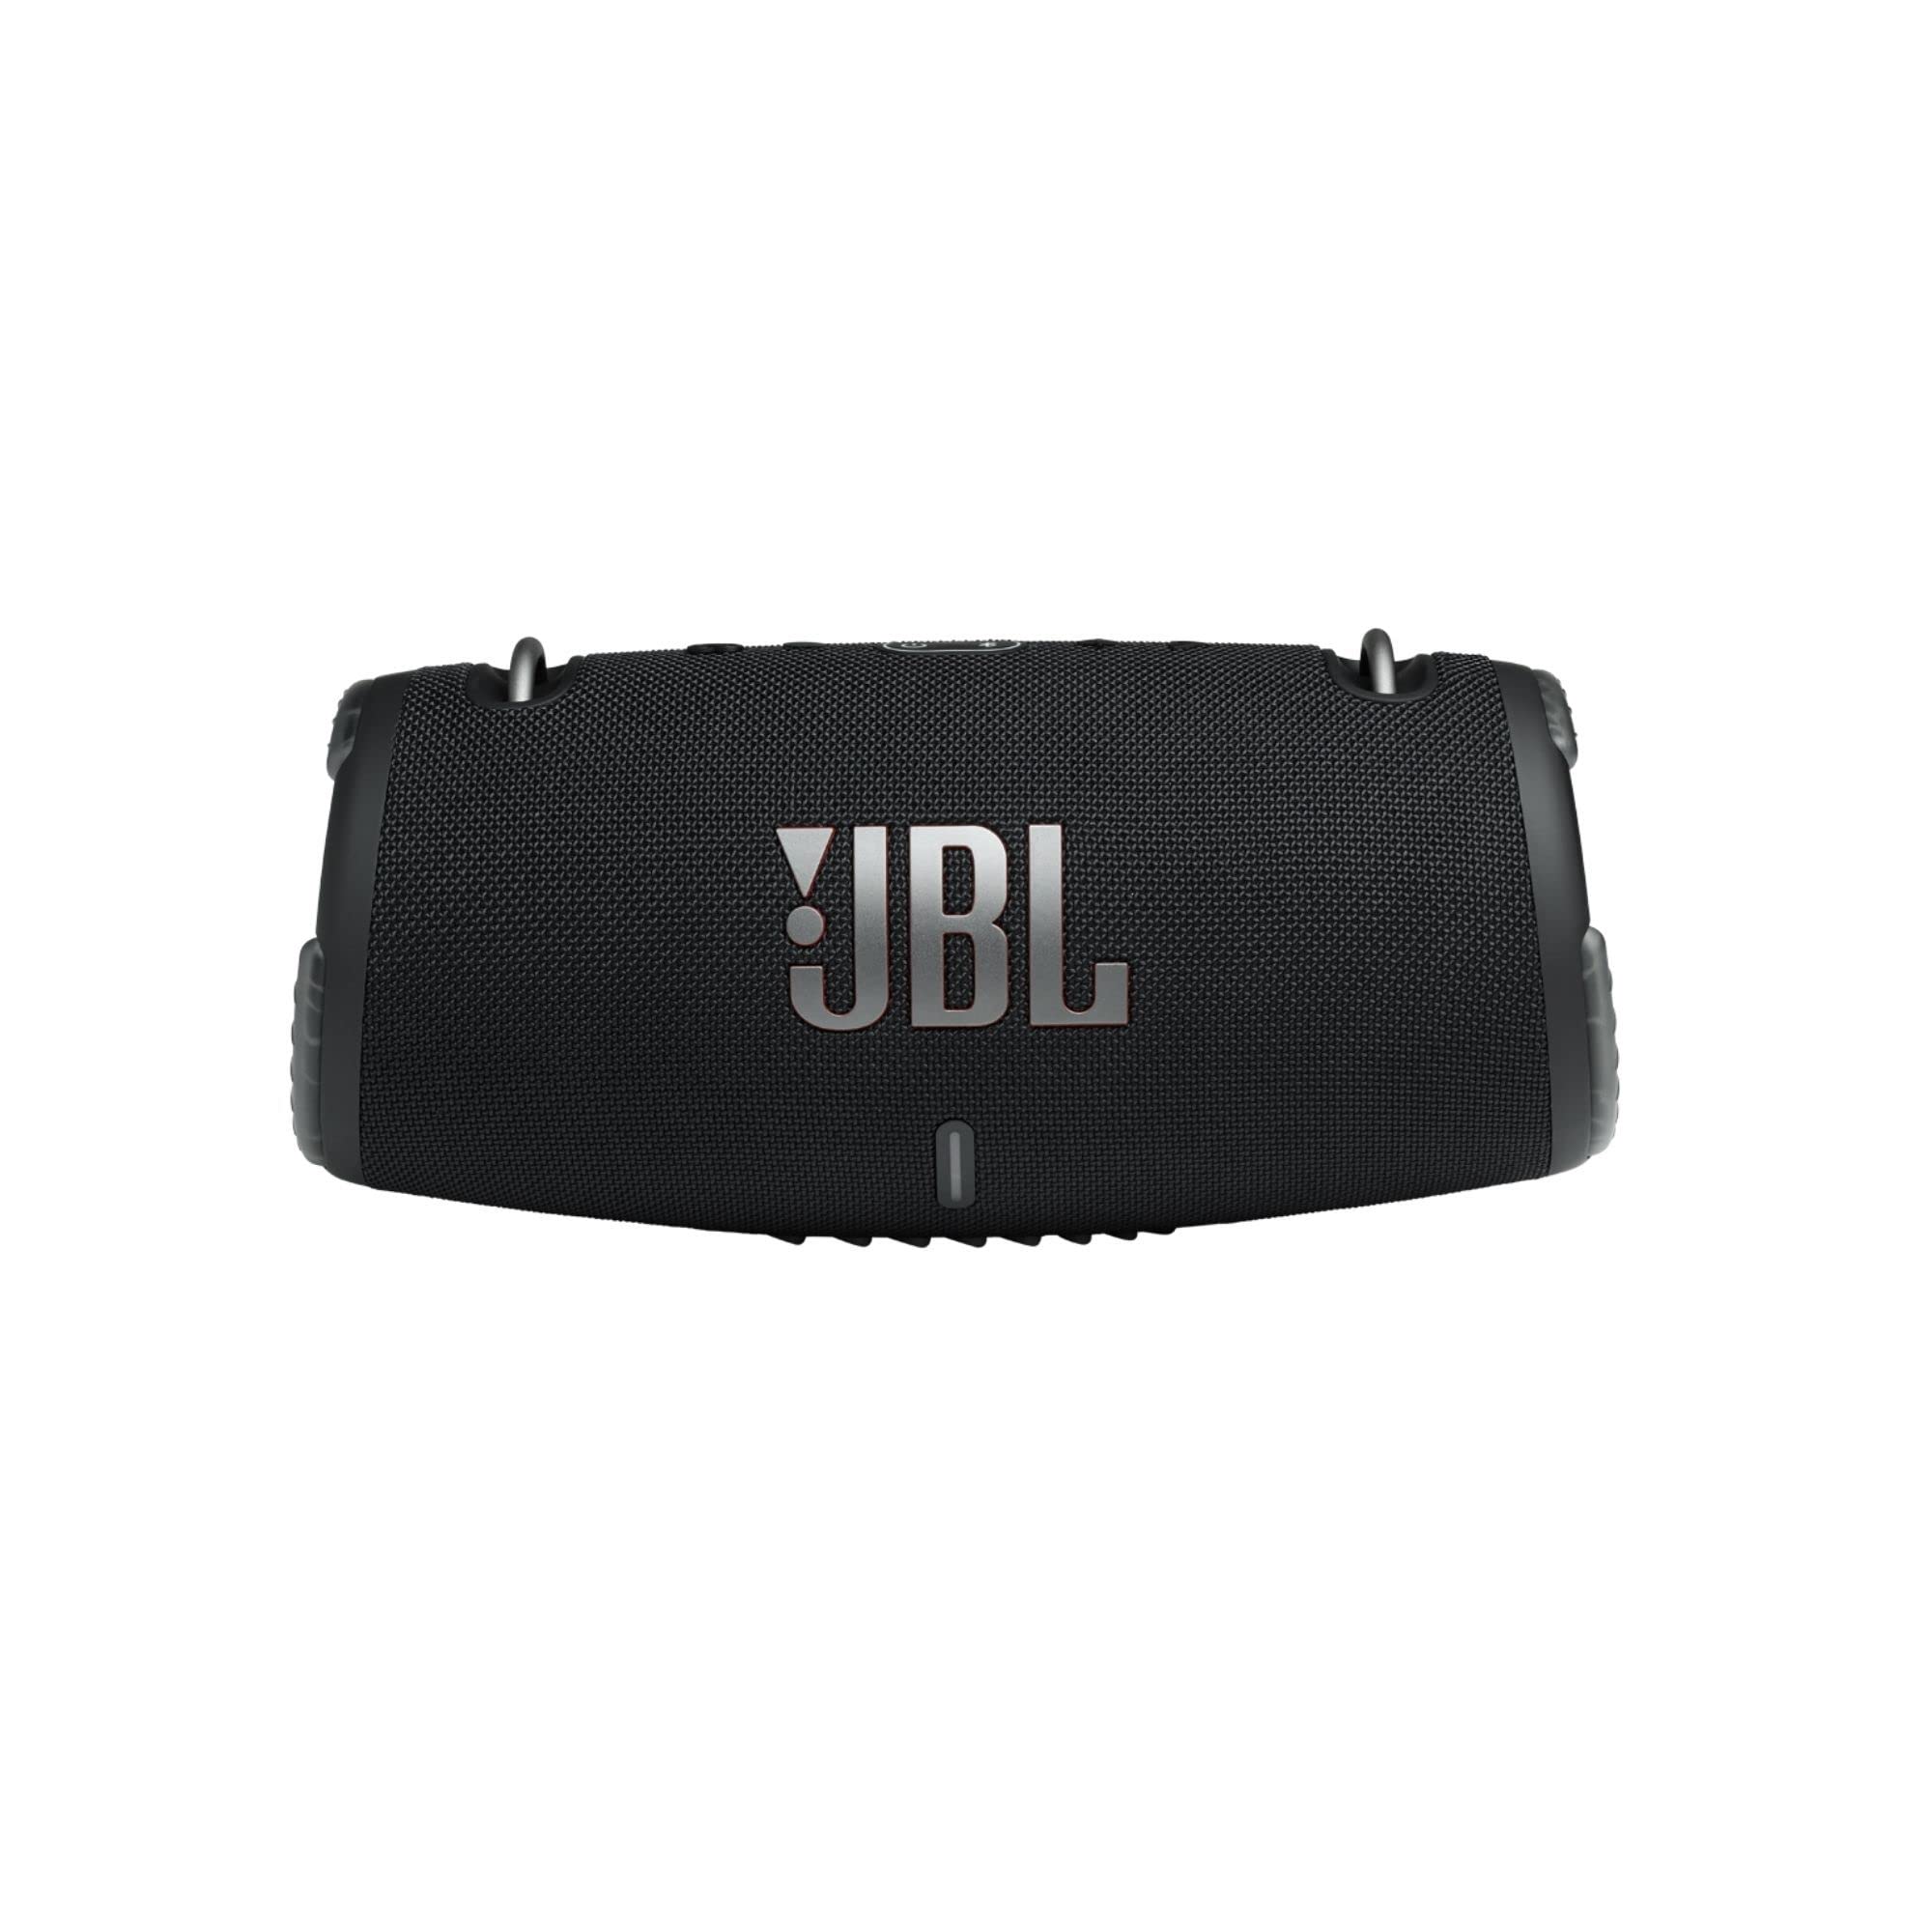 JBL Xtreme 3 - IP67 방수 기능을 갖춘 휴대용 블루투스 스피커